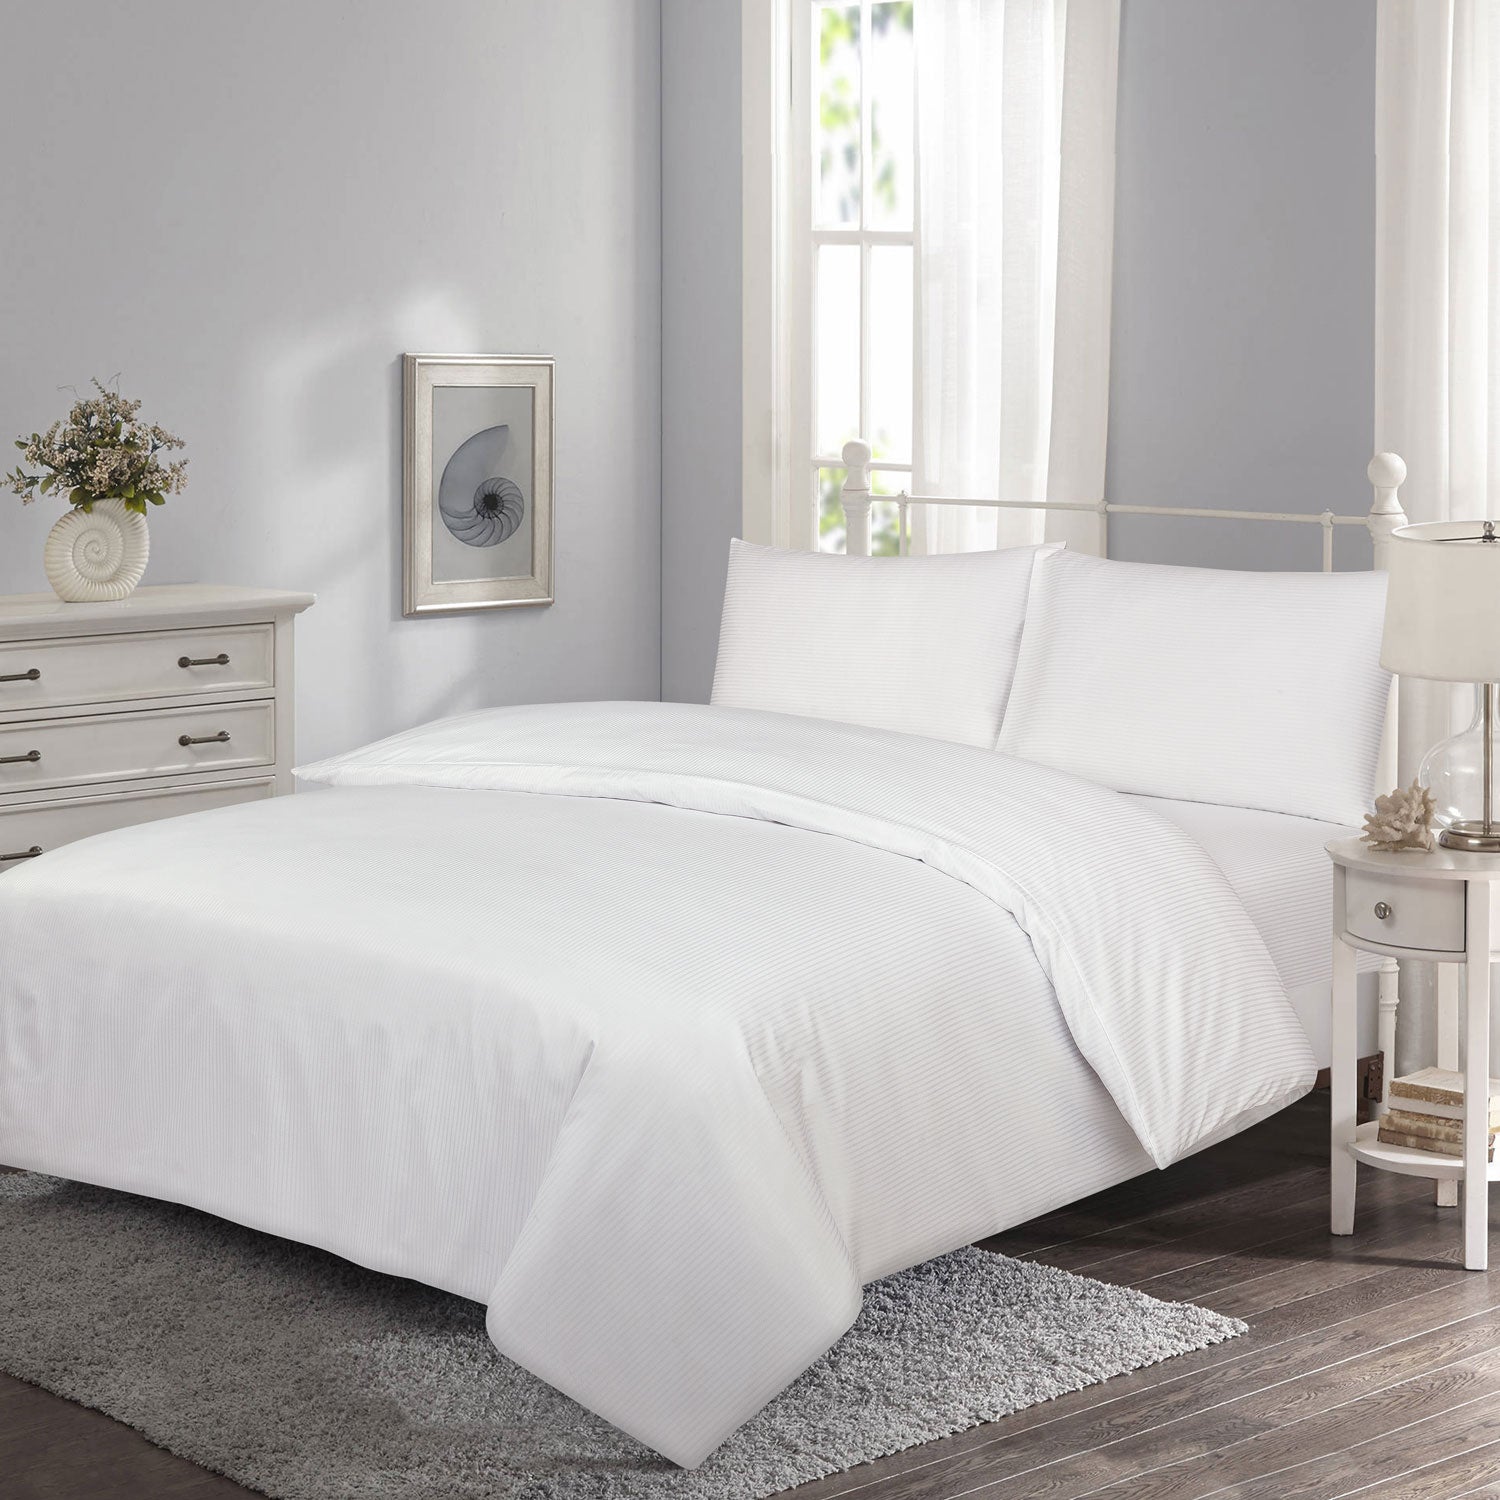  The Home Bedroom 300 Thread Count Satin Stripe Duvet Set - White 1 Shaws Department Stores